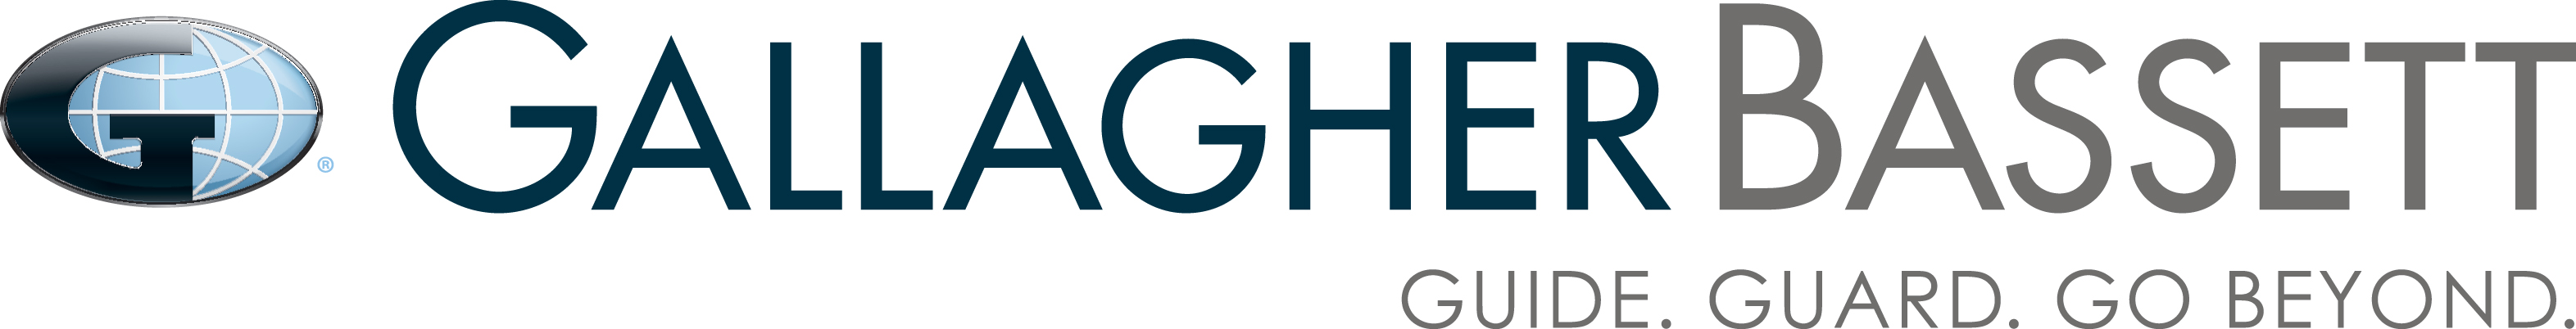 GB Logo 3D Four-Color Horizontal - With Tagline (1).jpg